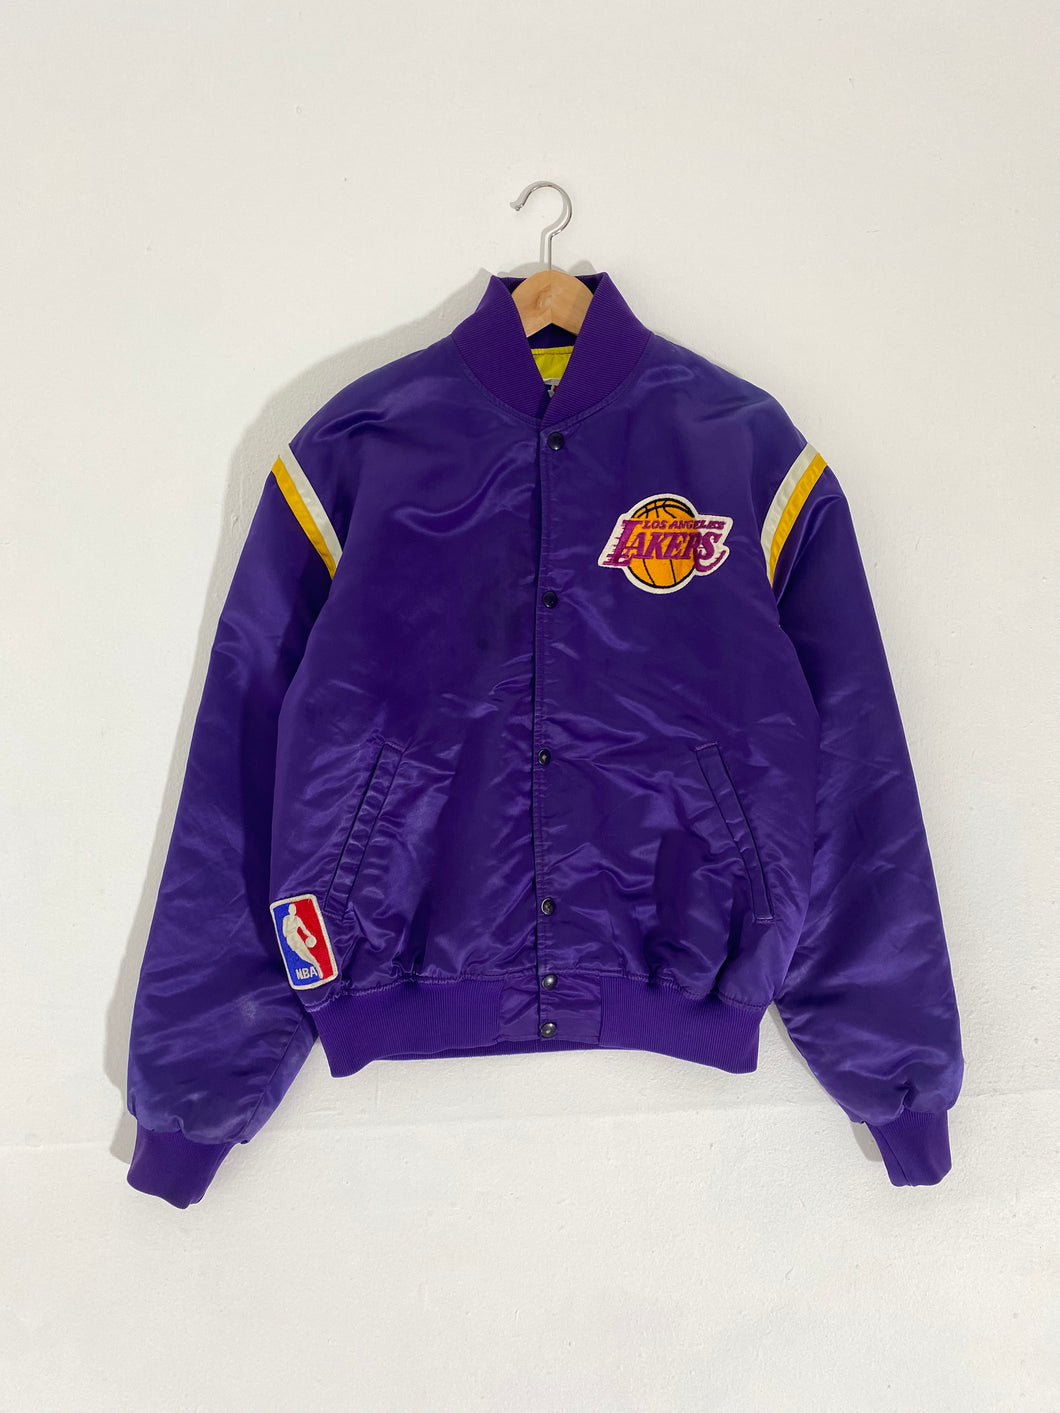 Vintage Starter Los Angeles Lakers Baseball Jersey - XL